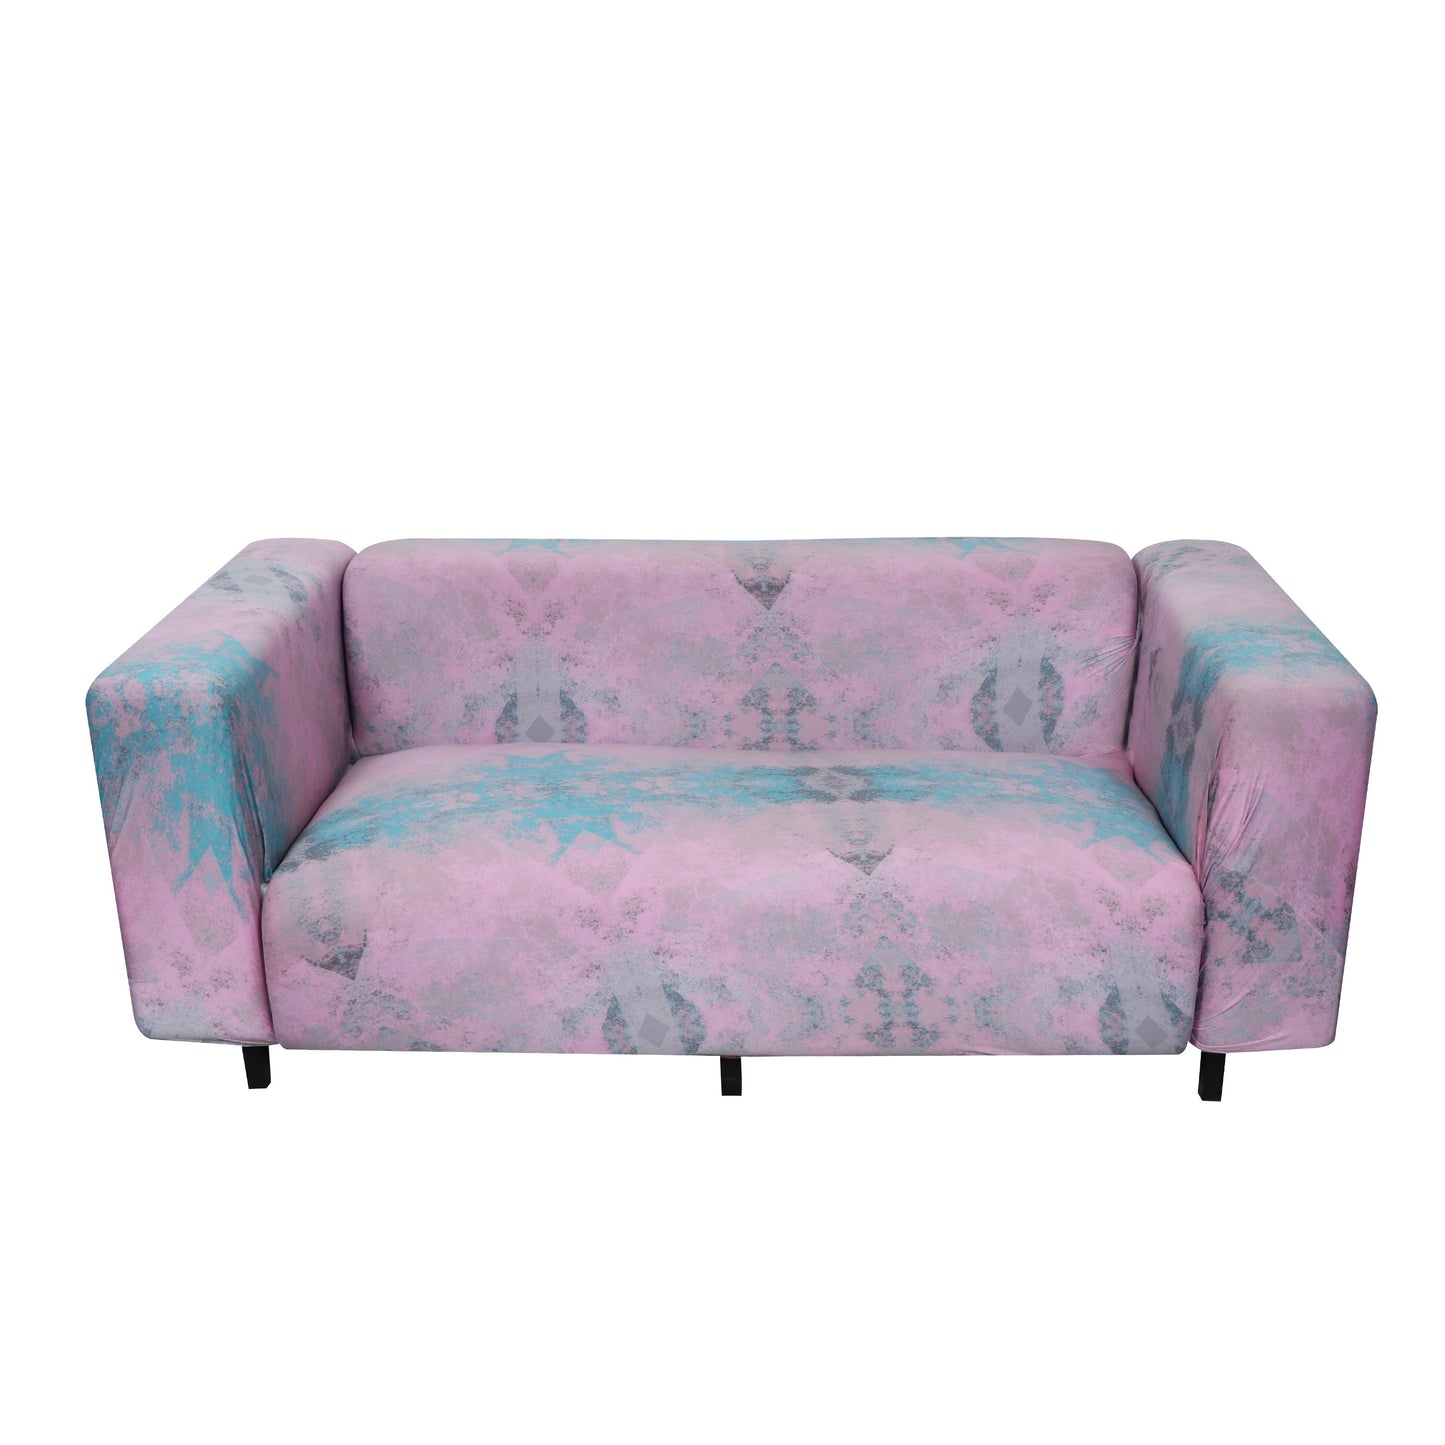 Printed Sofa Cover - Fog Pink